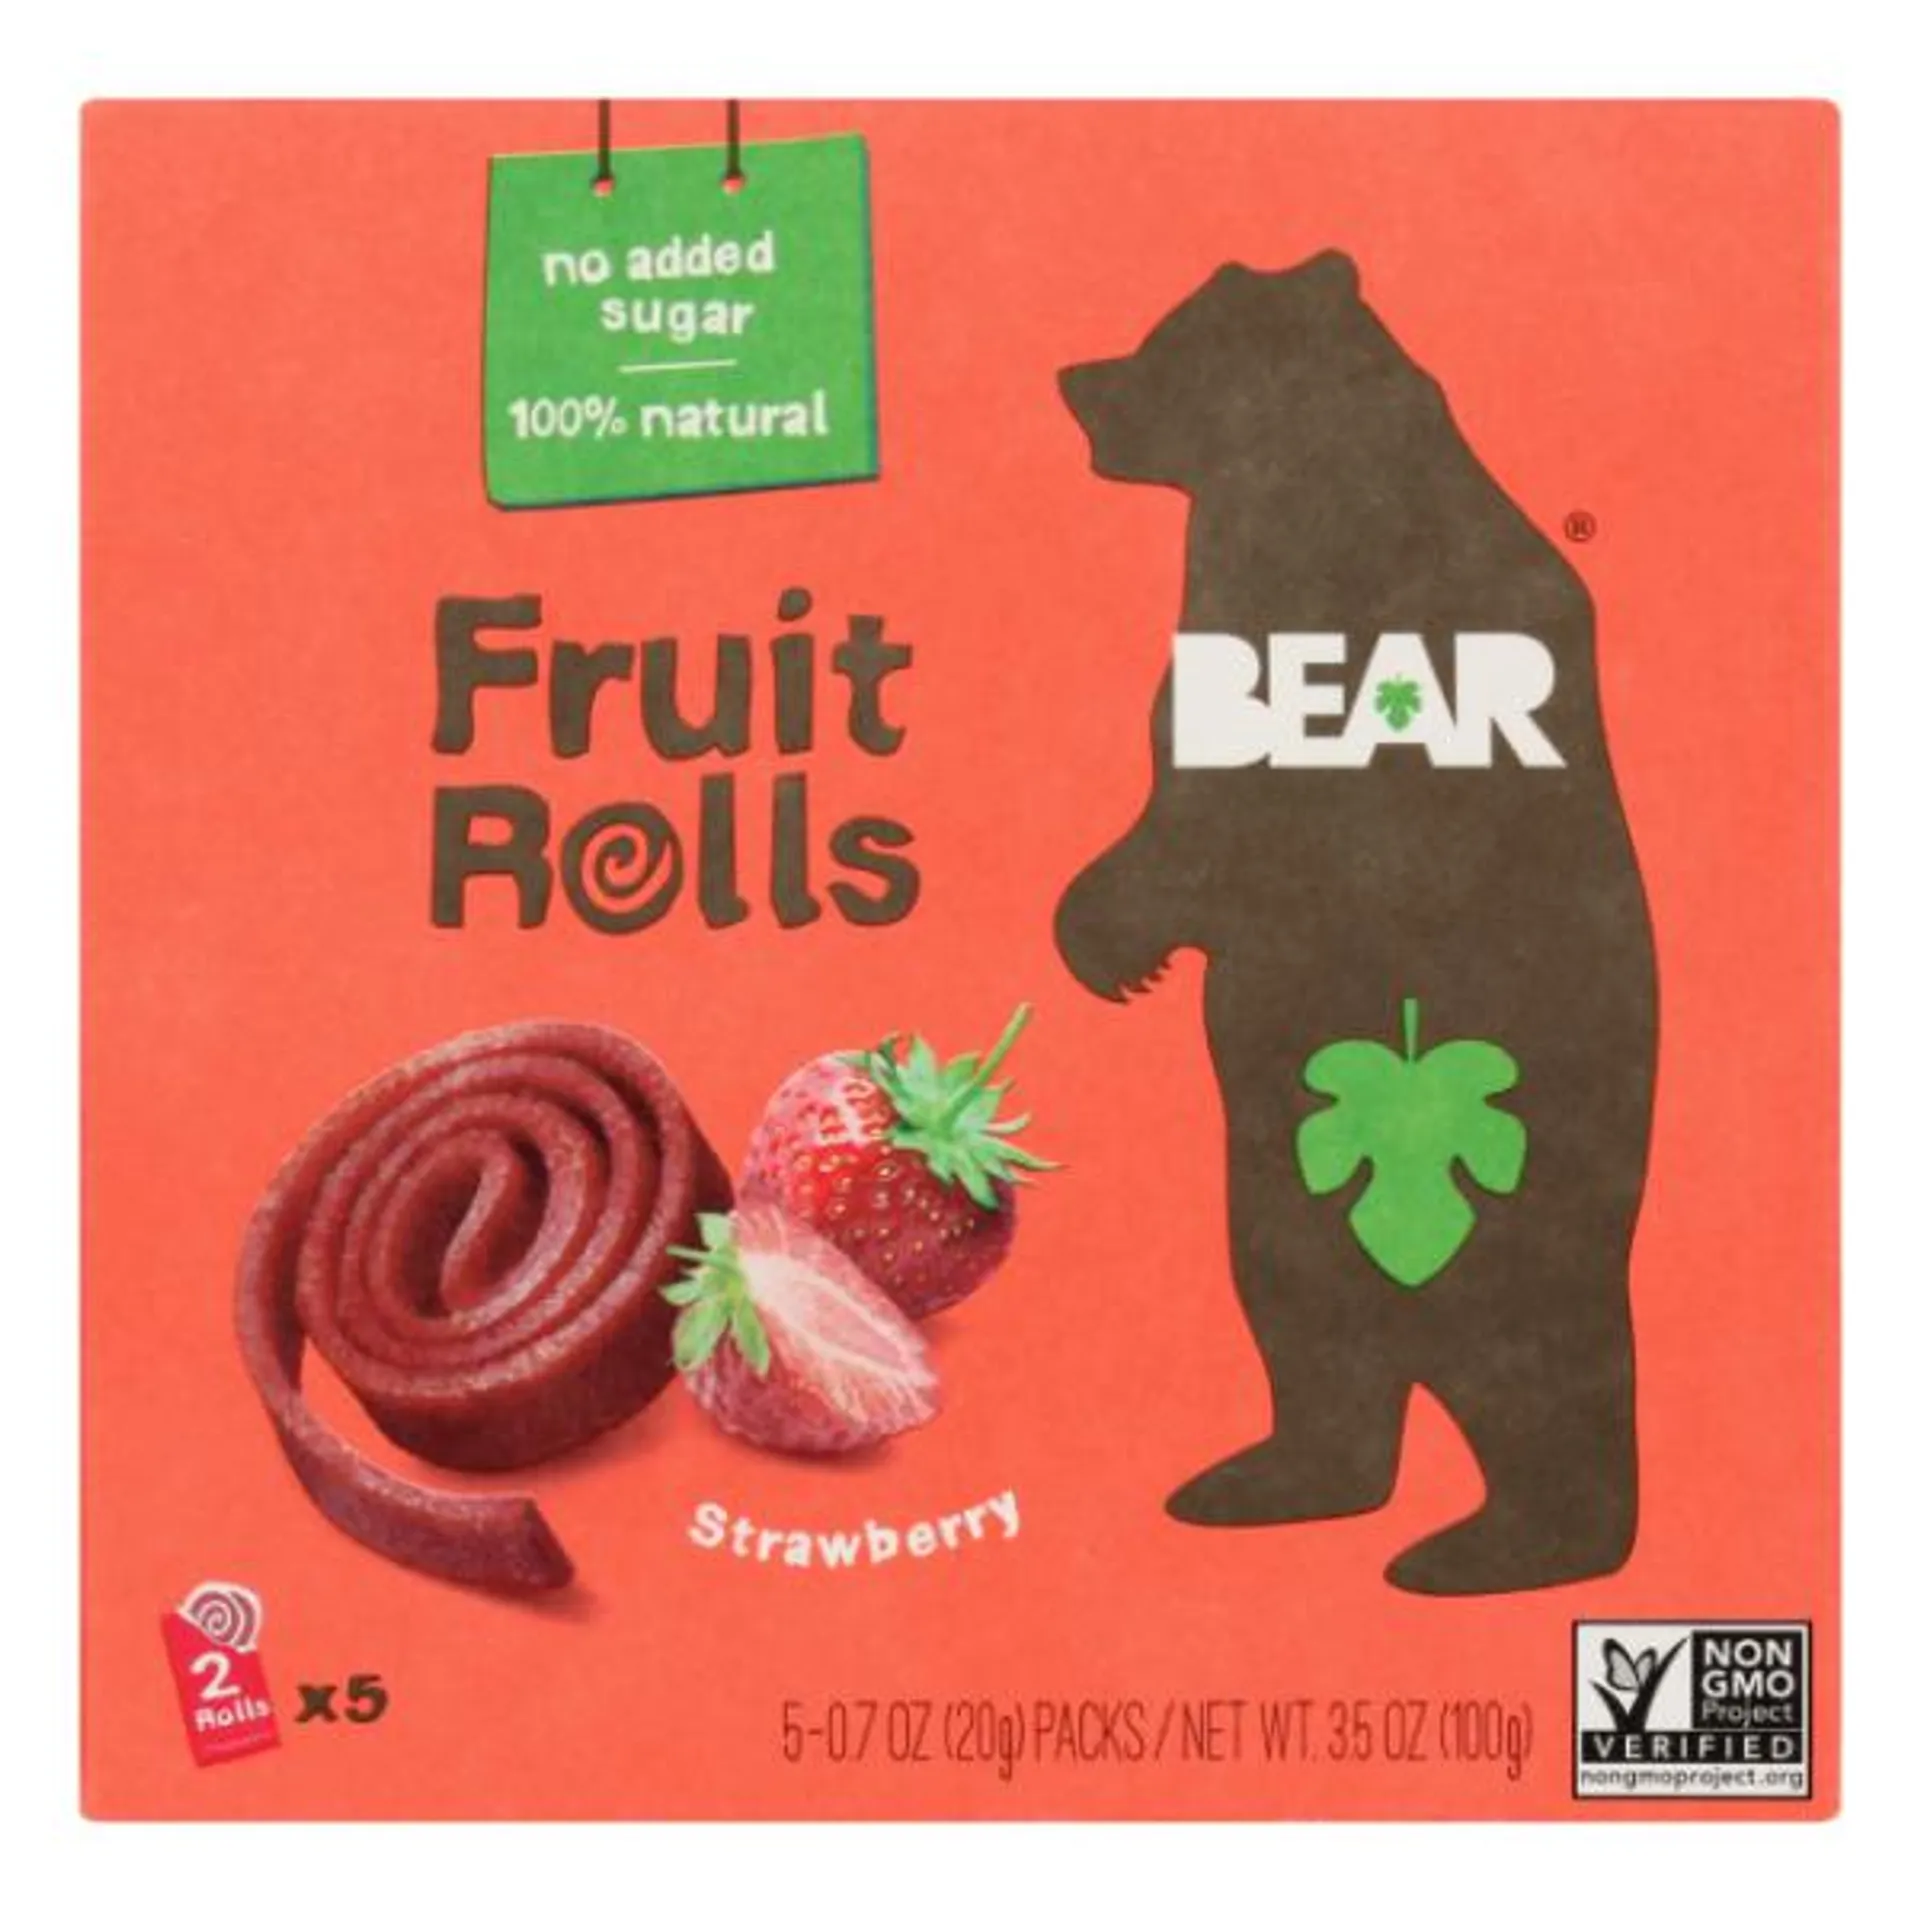 Bear Yoyo Strawberry Fruit Rolls 5 Pk - 3.5 Ounce